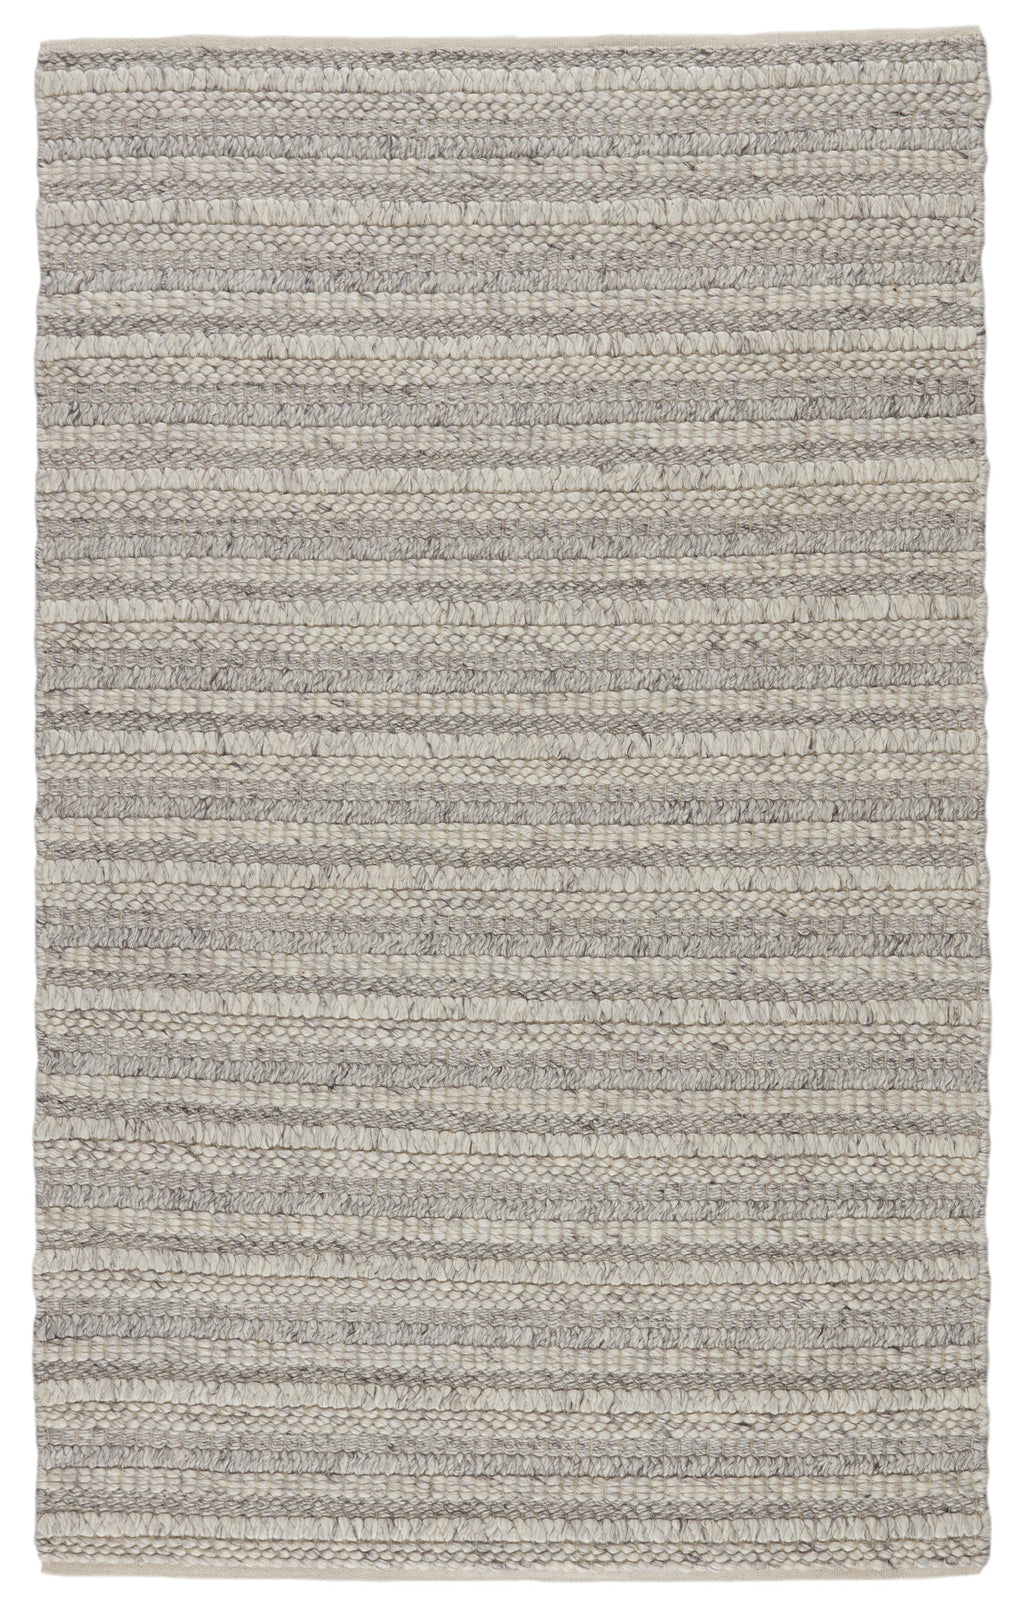 nebula handmade solid gray cream area rug by jaipur living 1